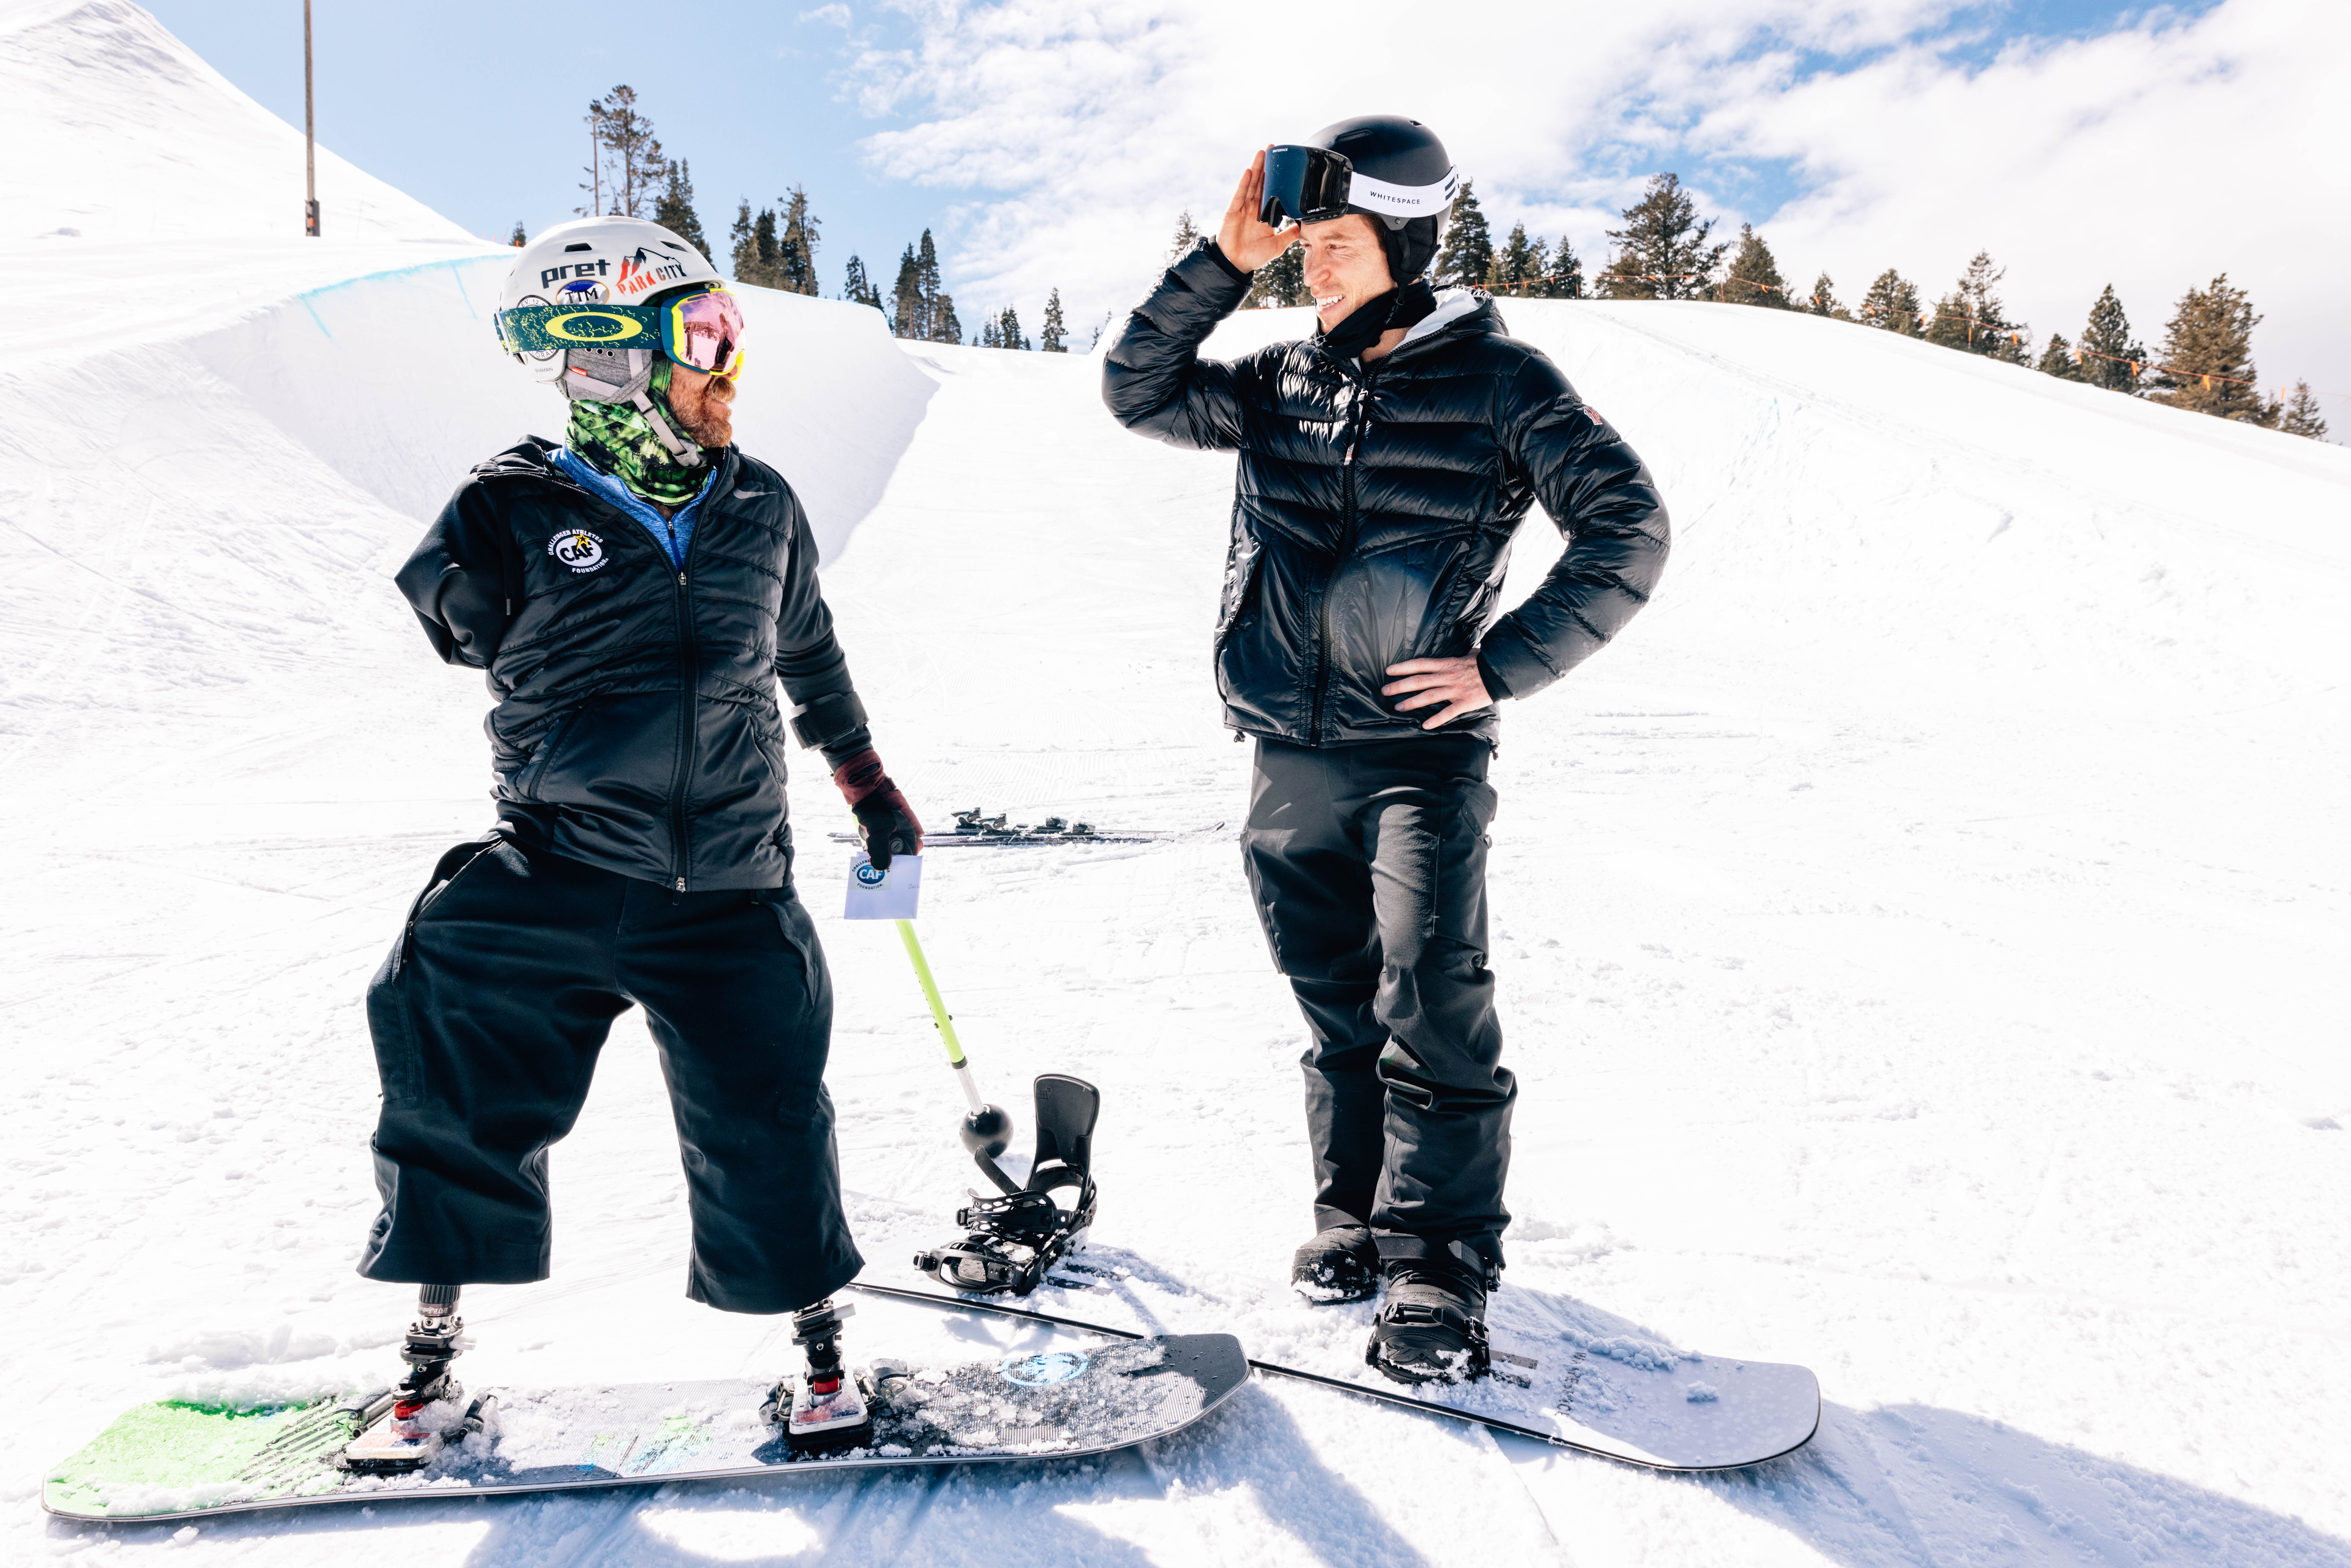 Shaun White: Snowboarder ends skateboard Olympic hopes